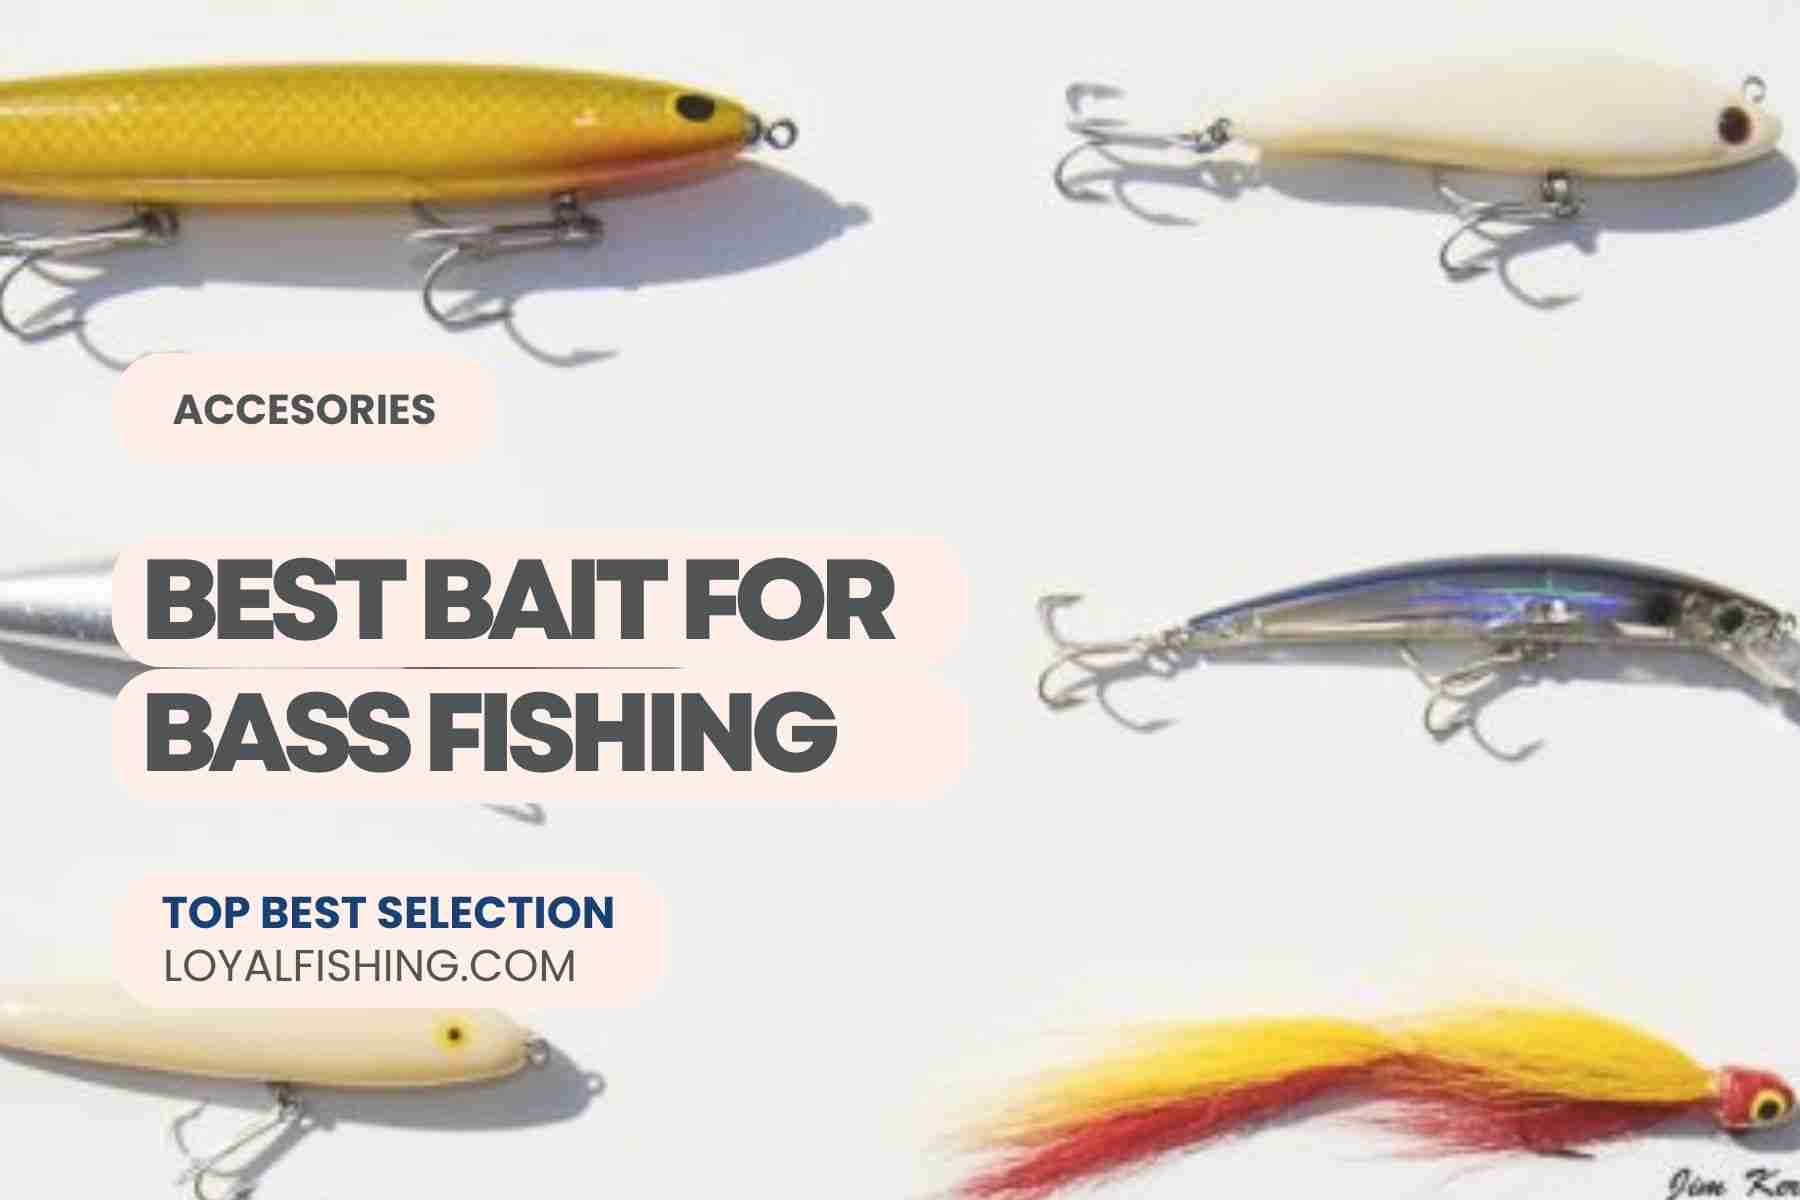 Best Bait for Bass Fishing